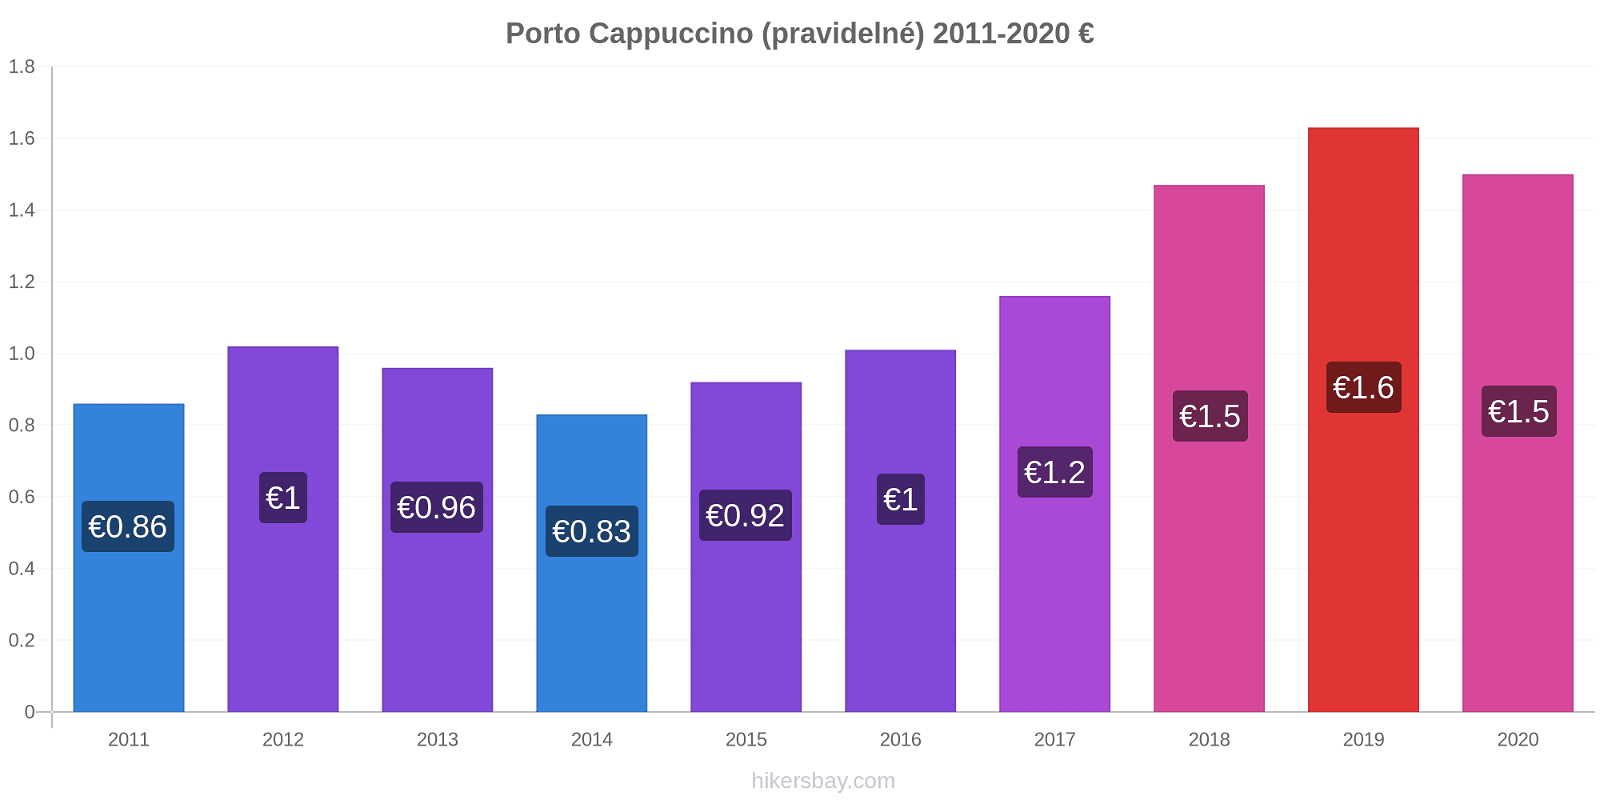 Porto změny cen Cappuccino (pravidelné) hikersbay.com